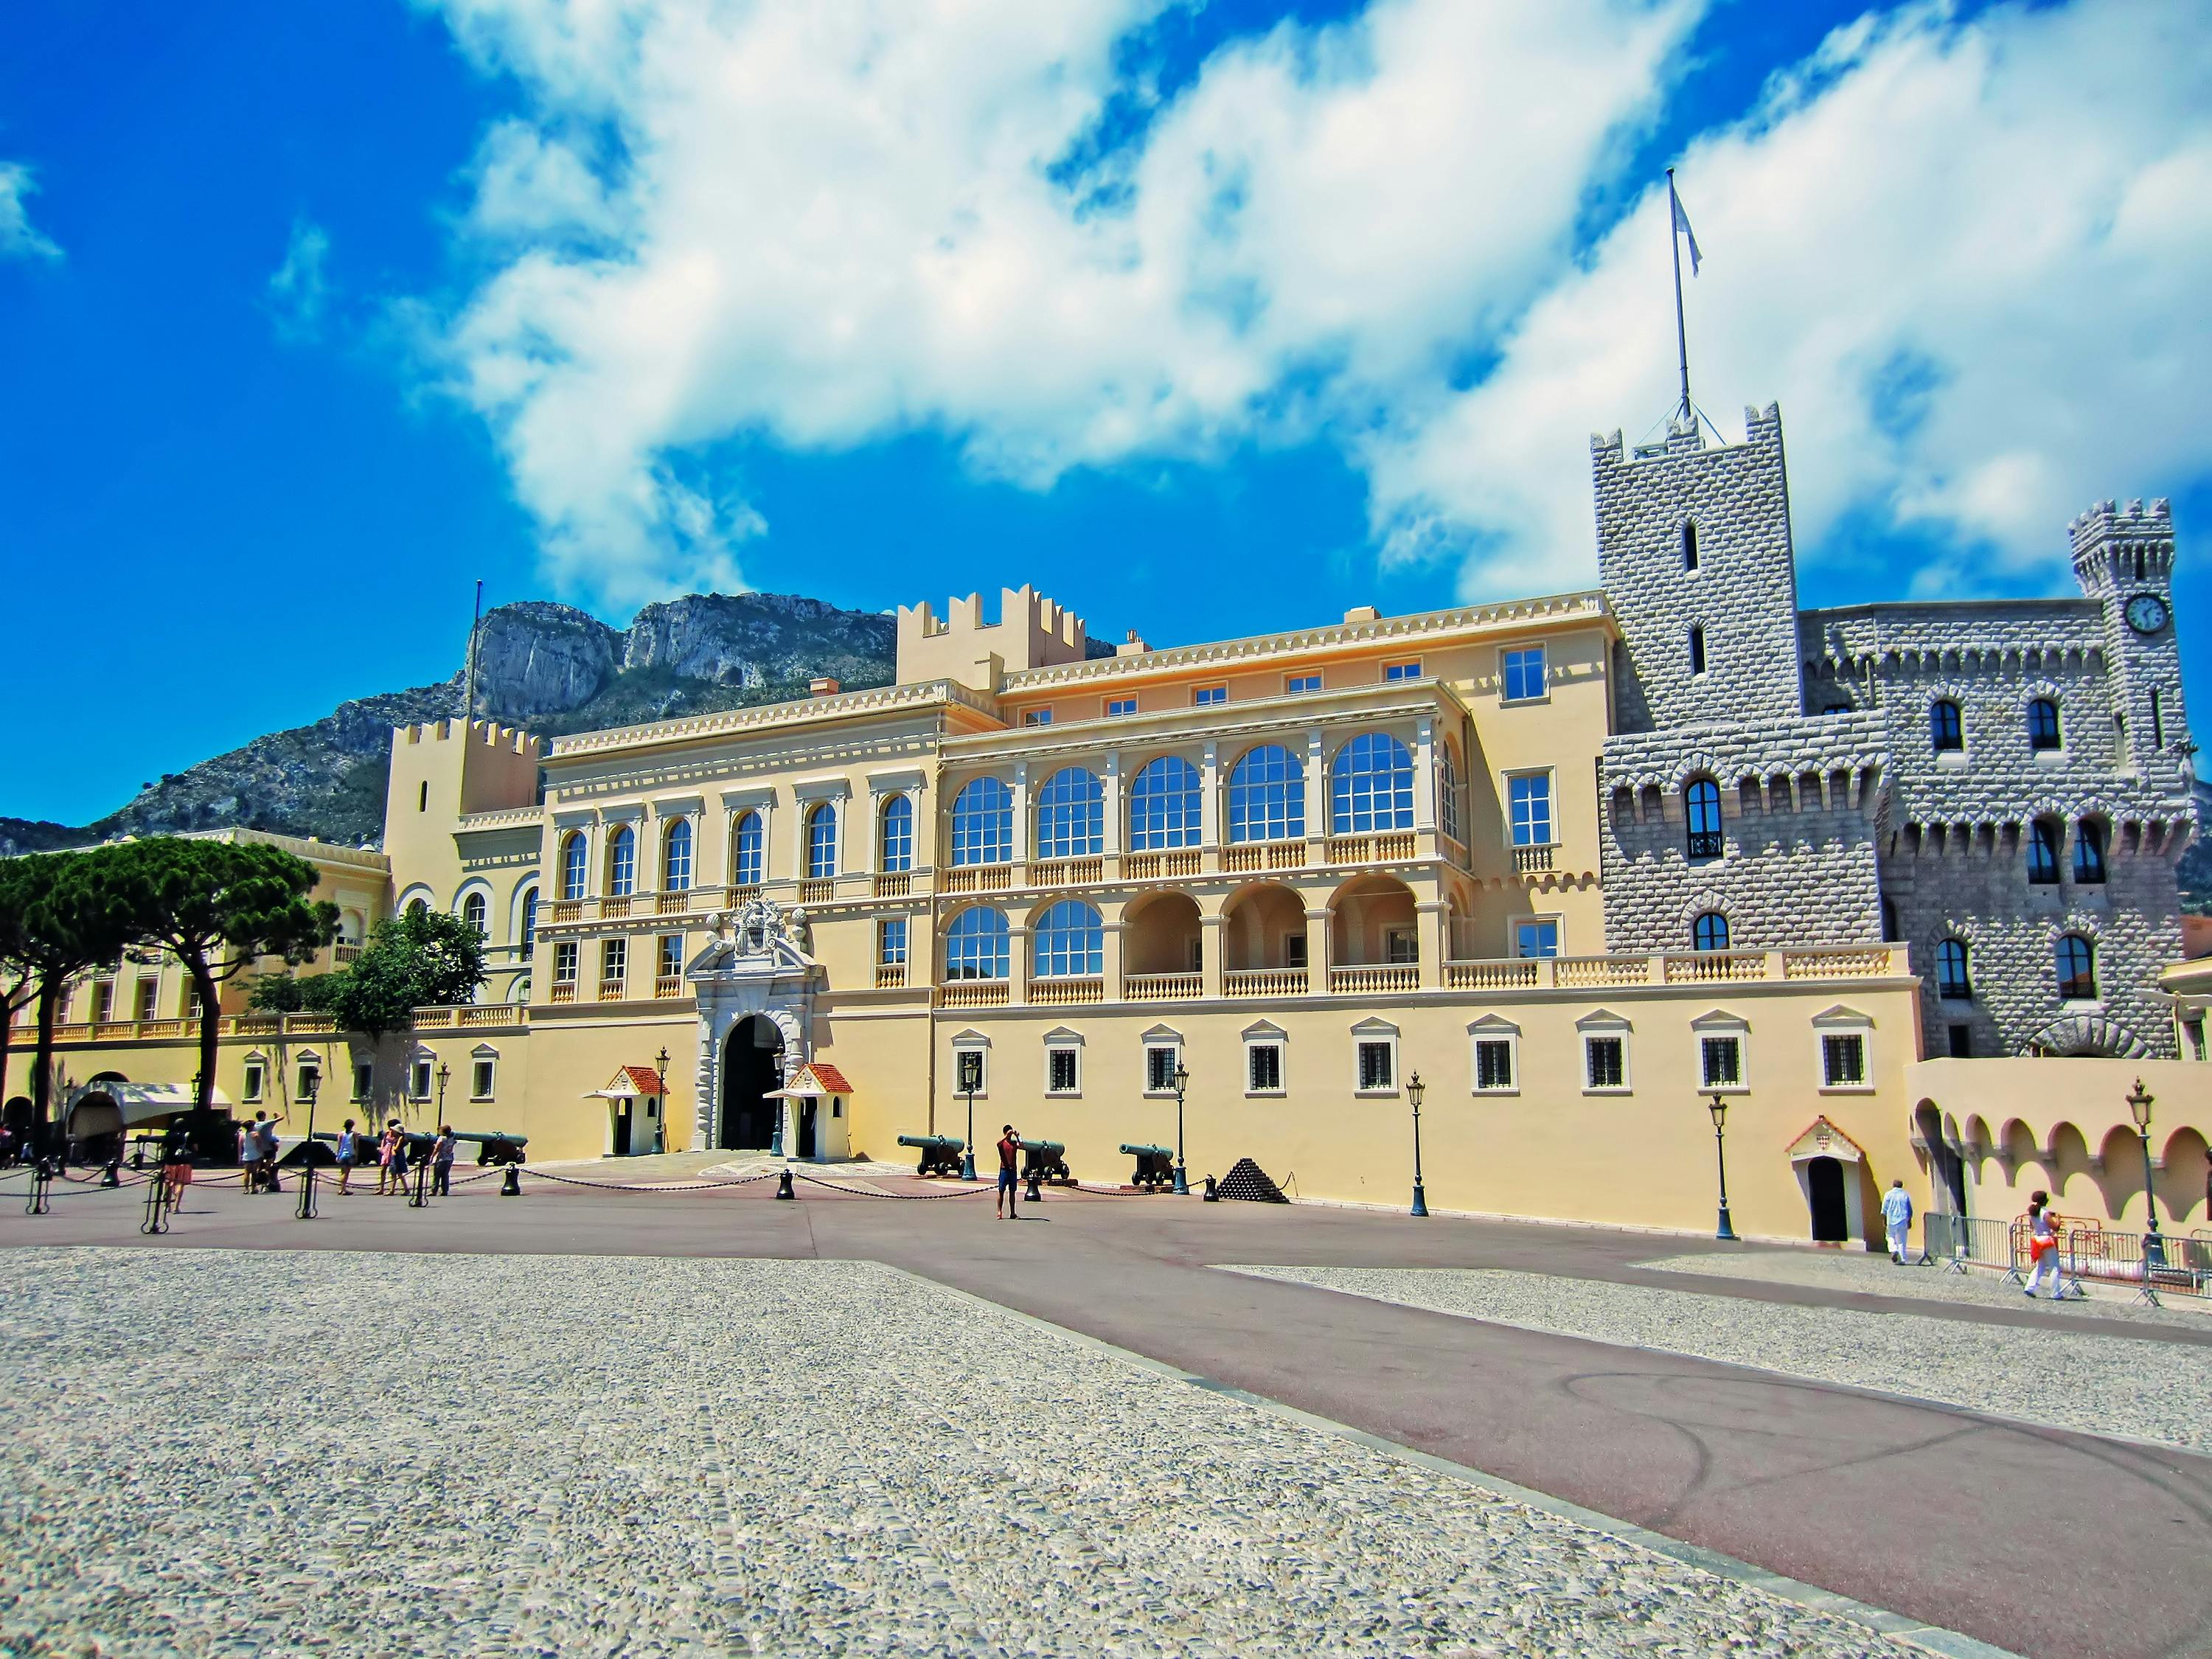 Prince's Palace Monaco